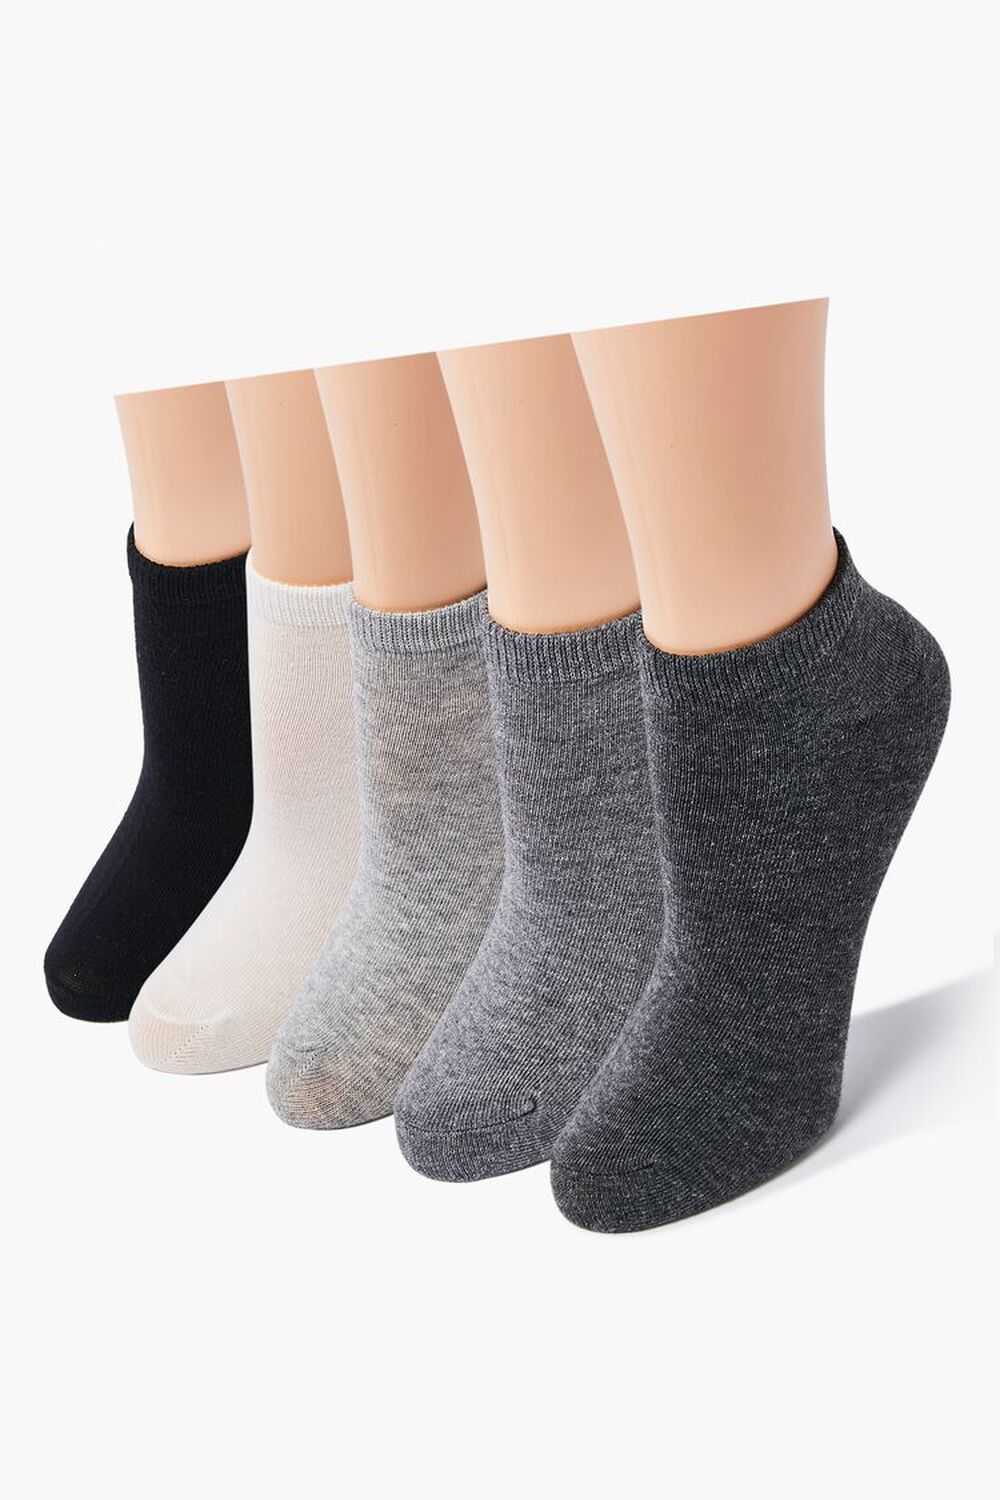 Ankle Socks - 5 Pack, image 1